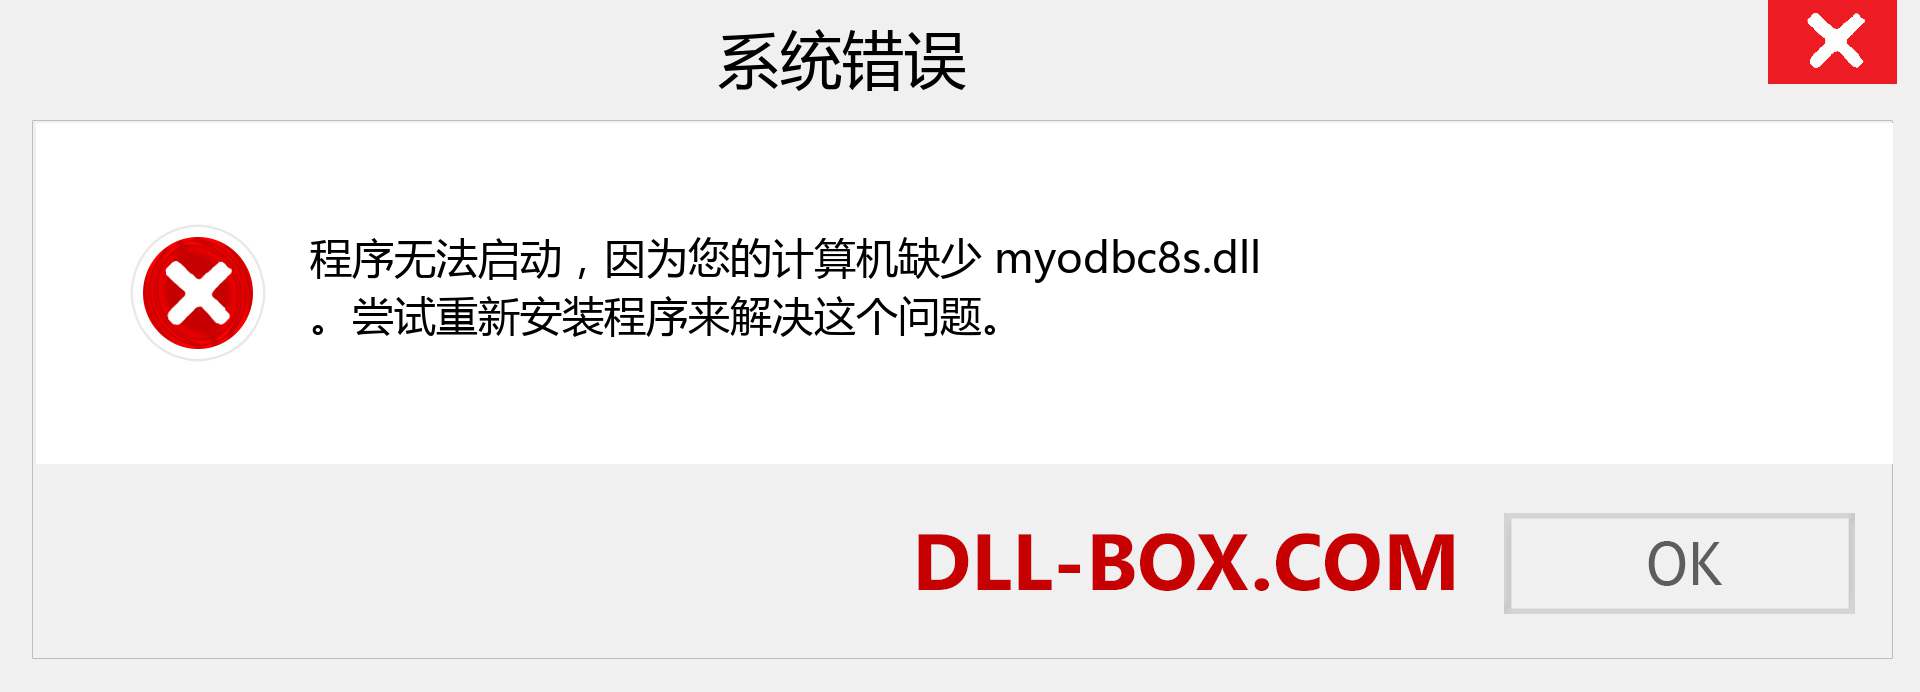 myodbc8s.dll 文件丢失？。 适用于 Windows 7、8、10 的下载 - 修复 Windows、照片、图像上的 myodbc8s dll 丢失错误